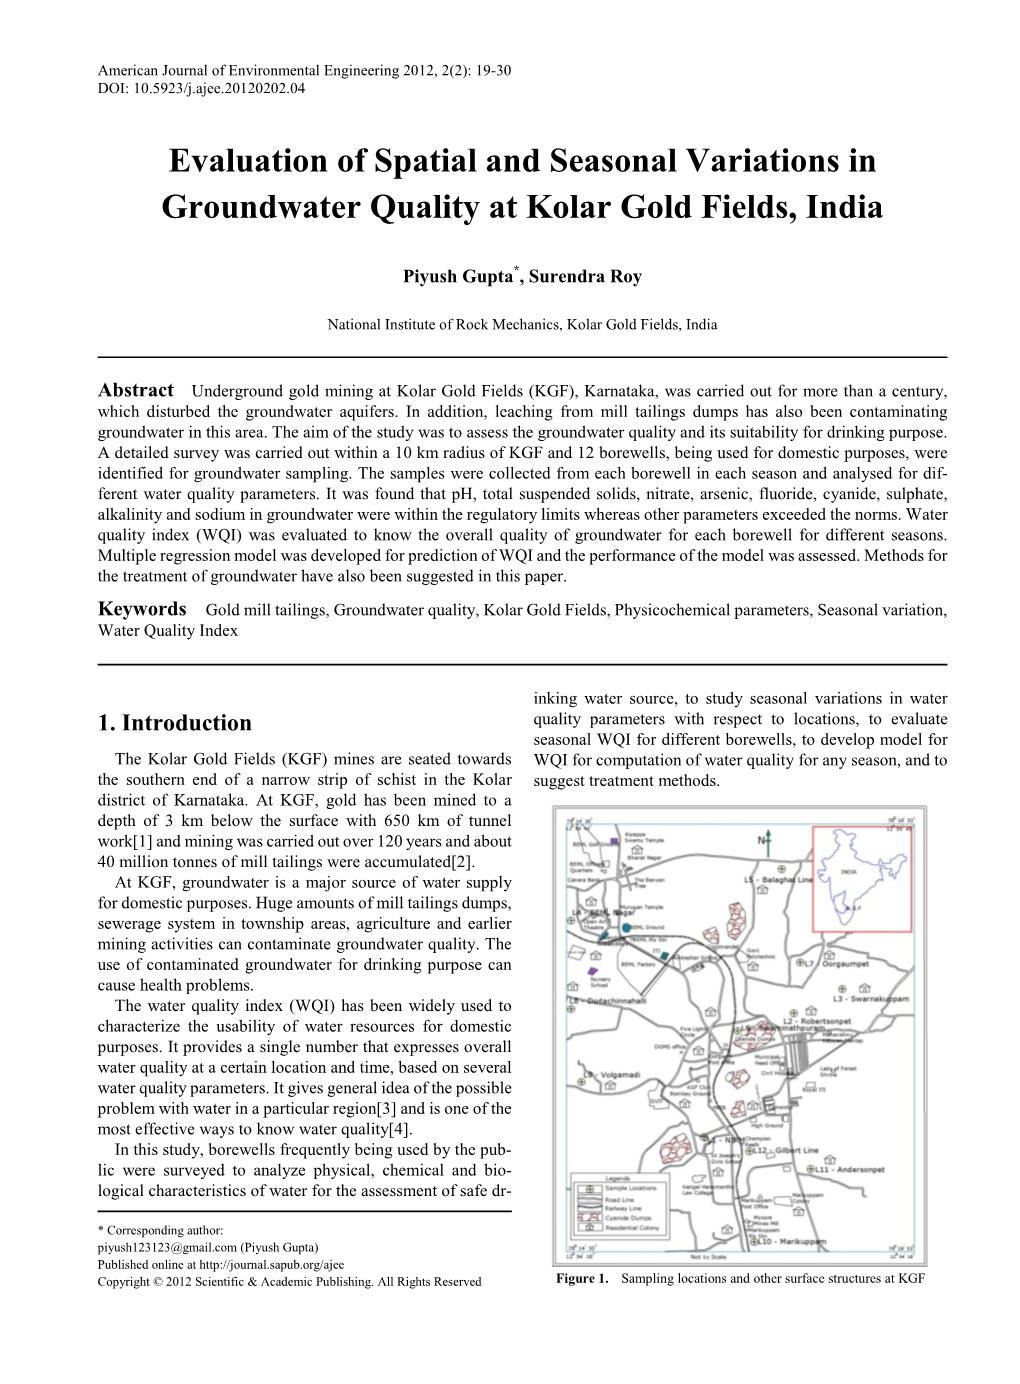 Groundwater Quality; Kolar Gold Fields; Physicochemical Parameters